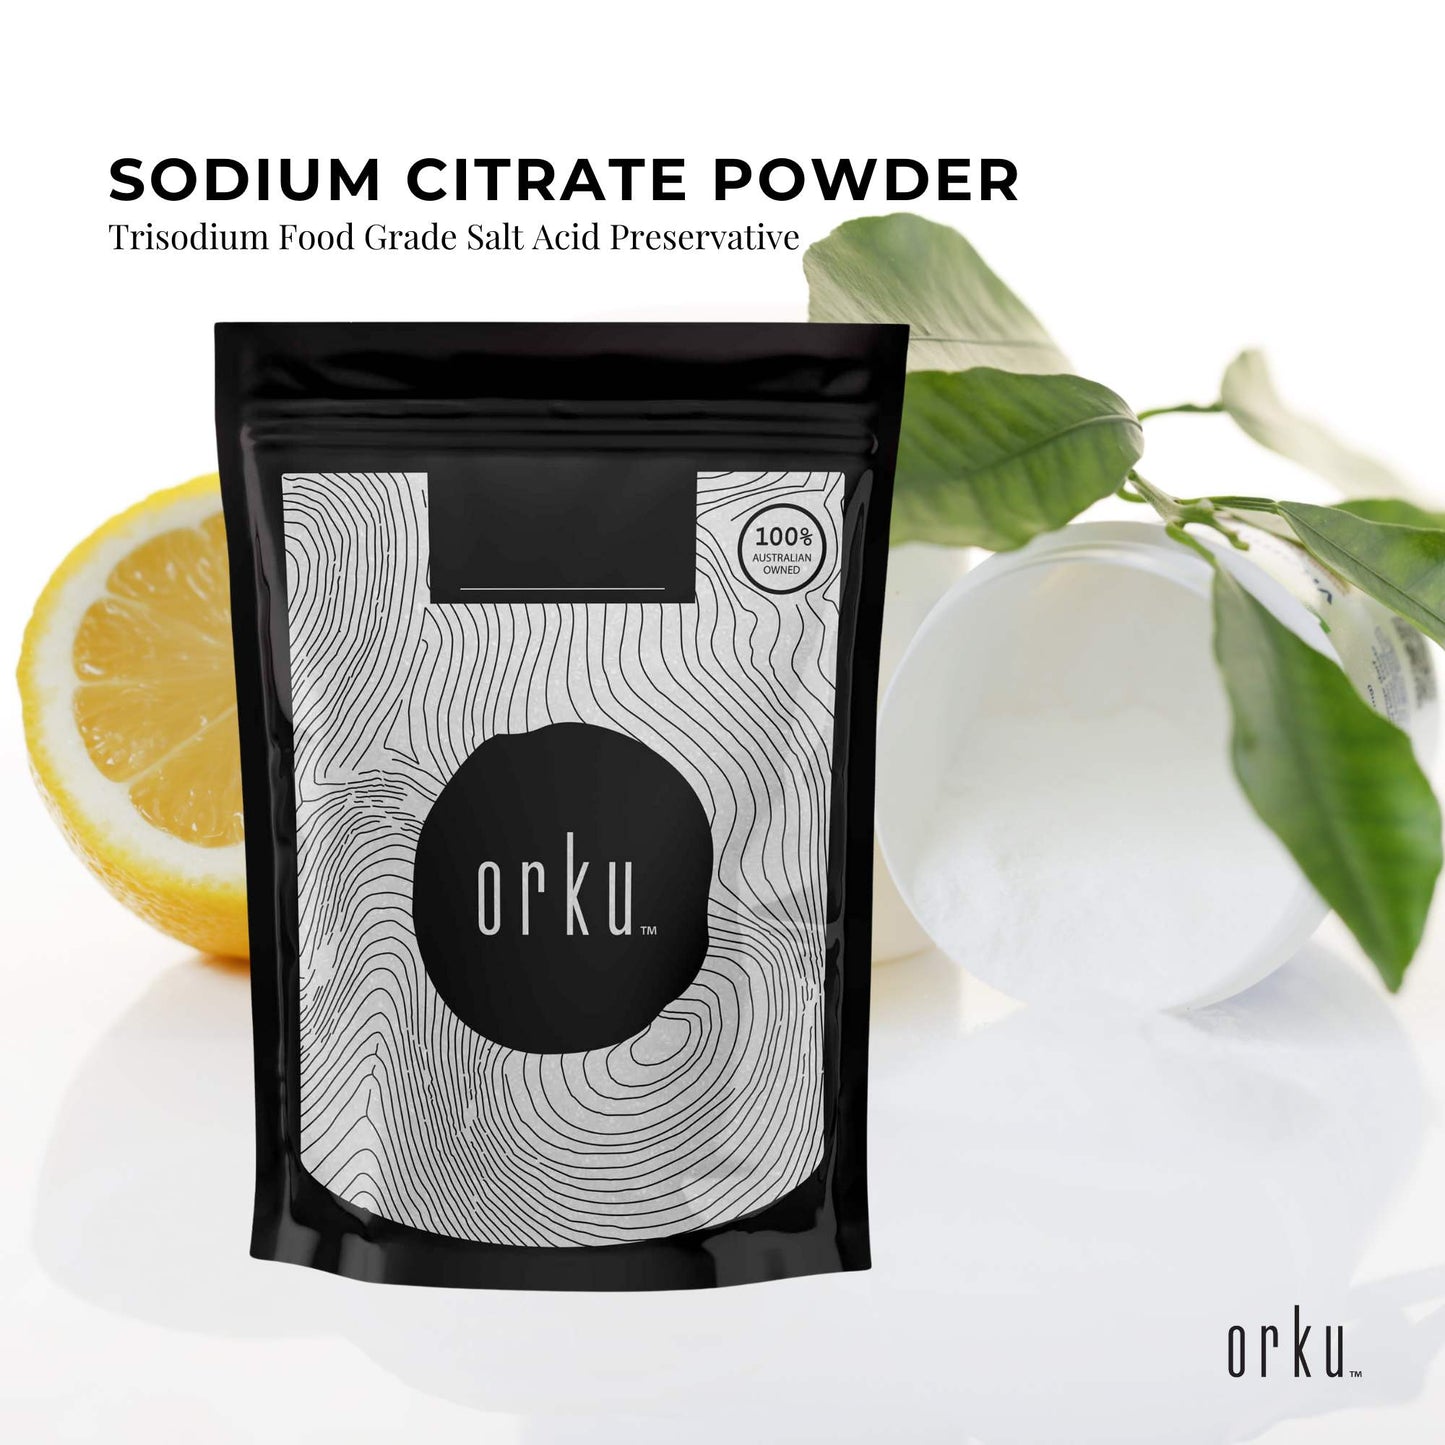 100g Sodium Citrate Powder - Trisodium Food Grade Salt Acid Preservative